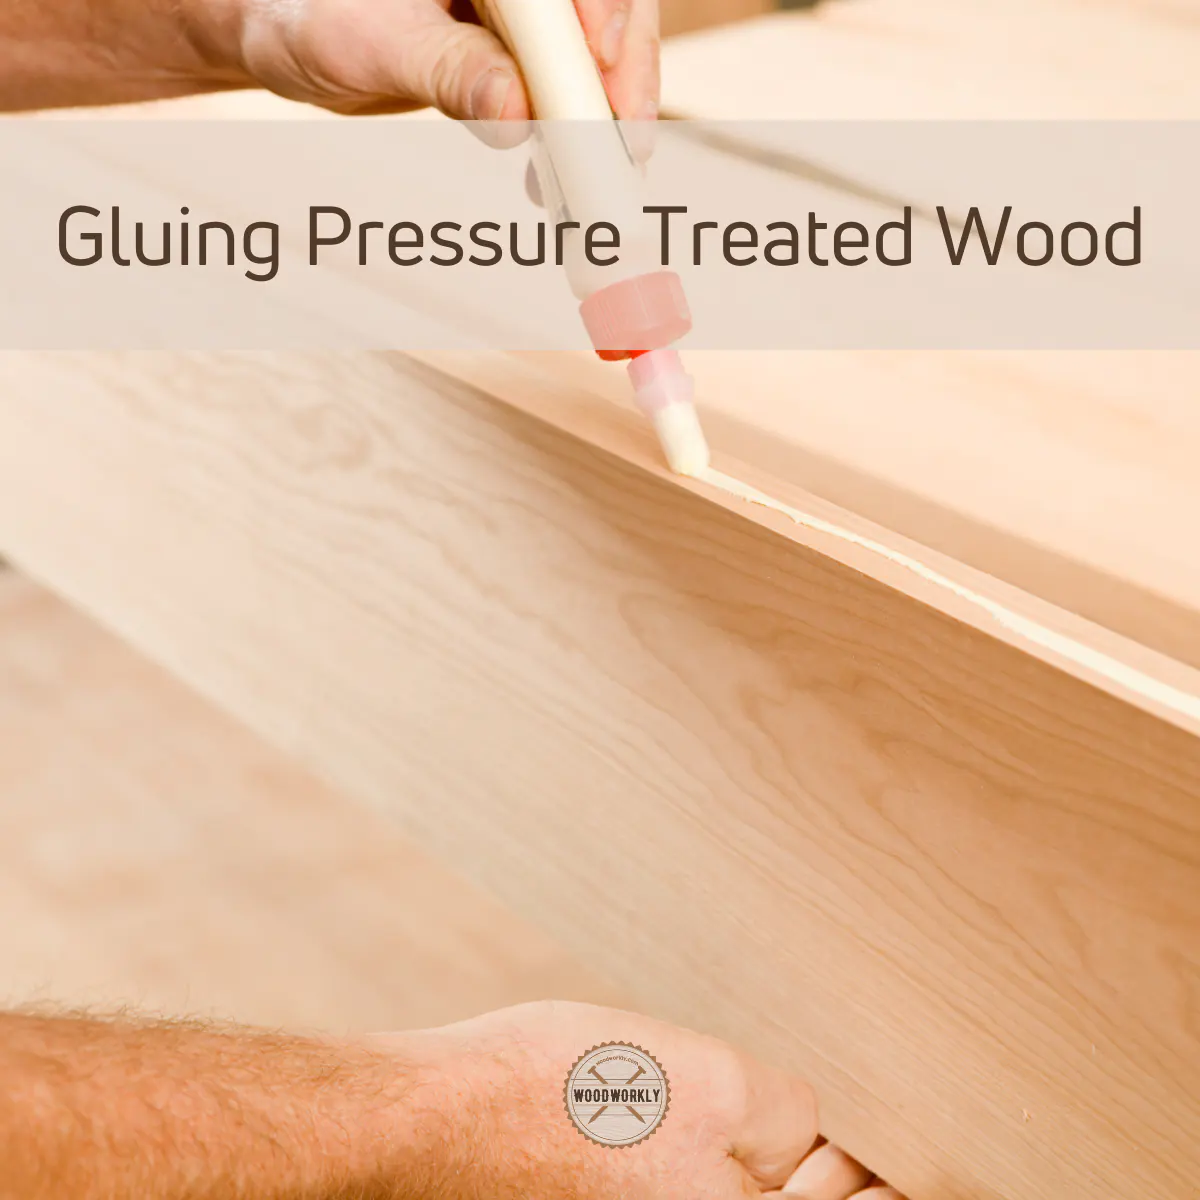 Gluing Pressure Treated Wood